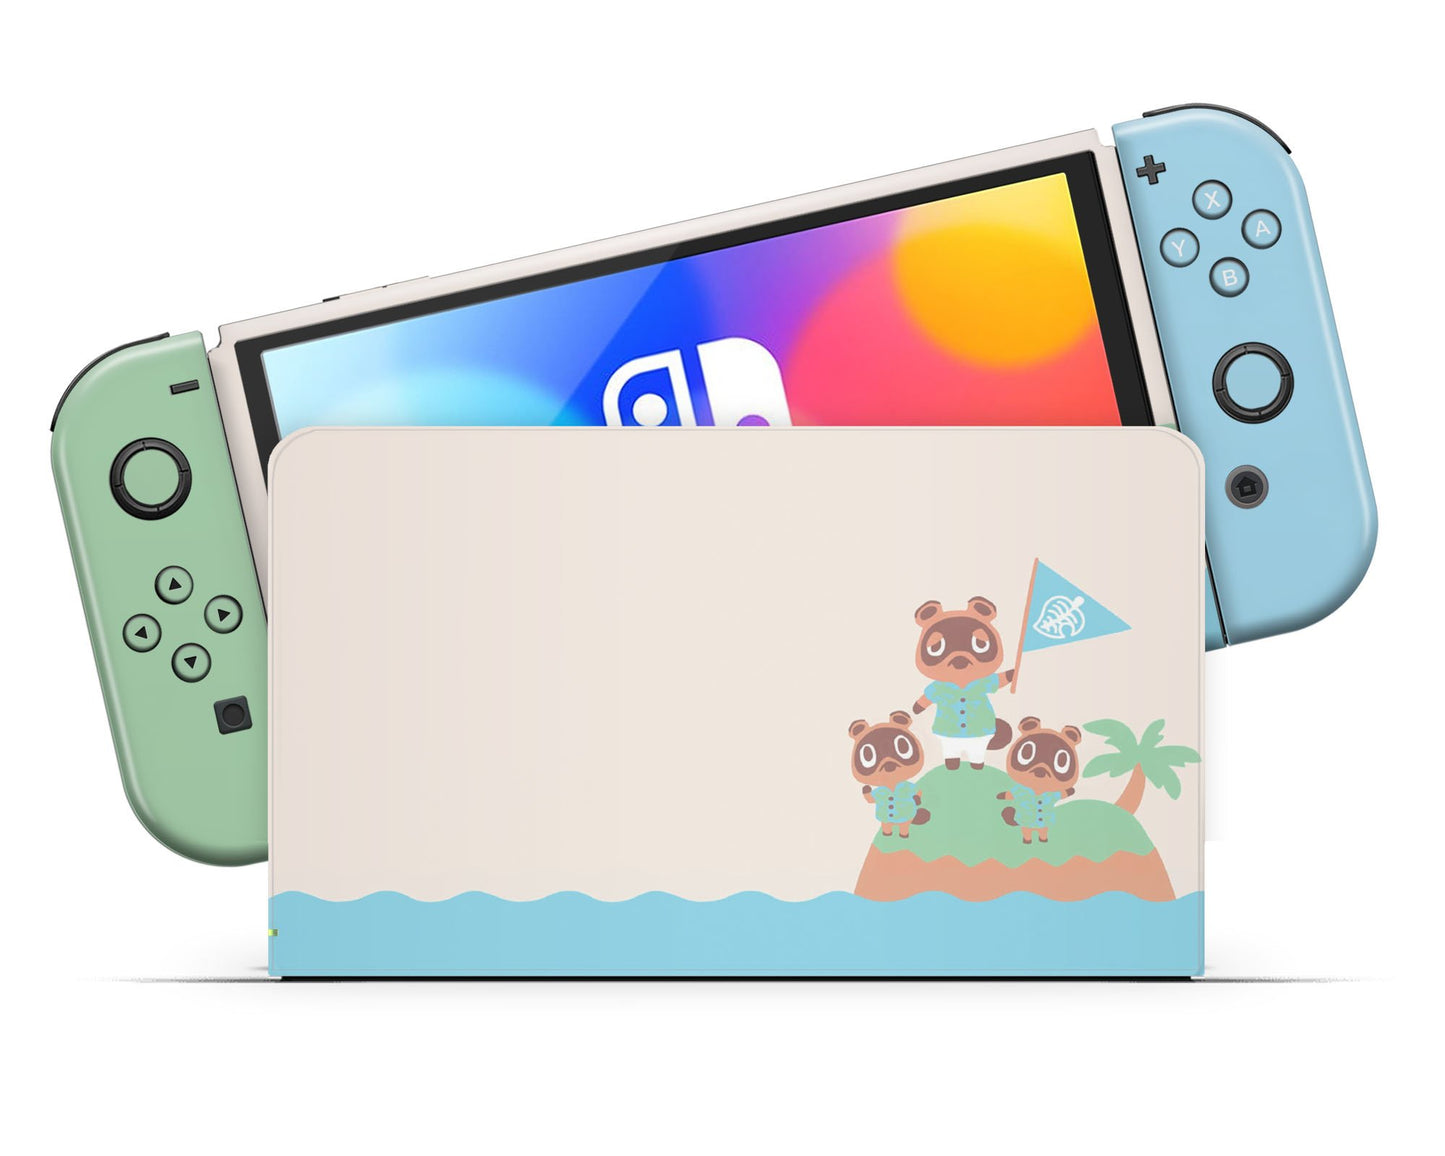 Lux Skins Nintendo Switch OLED Animal Crossing New Horizons Full Set Skins - Pop culture Animal Crossing Skin